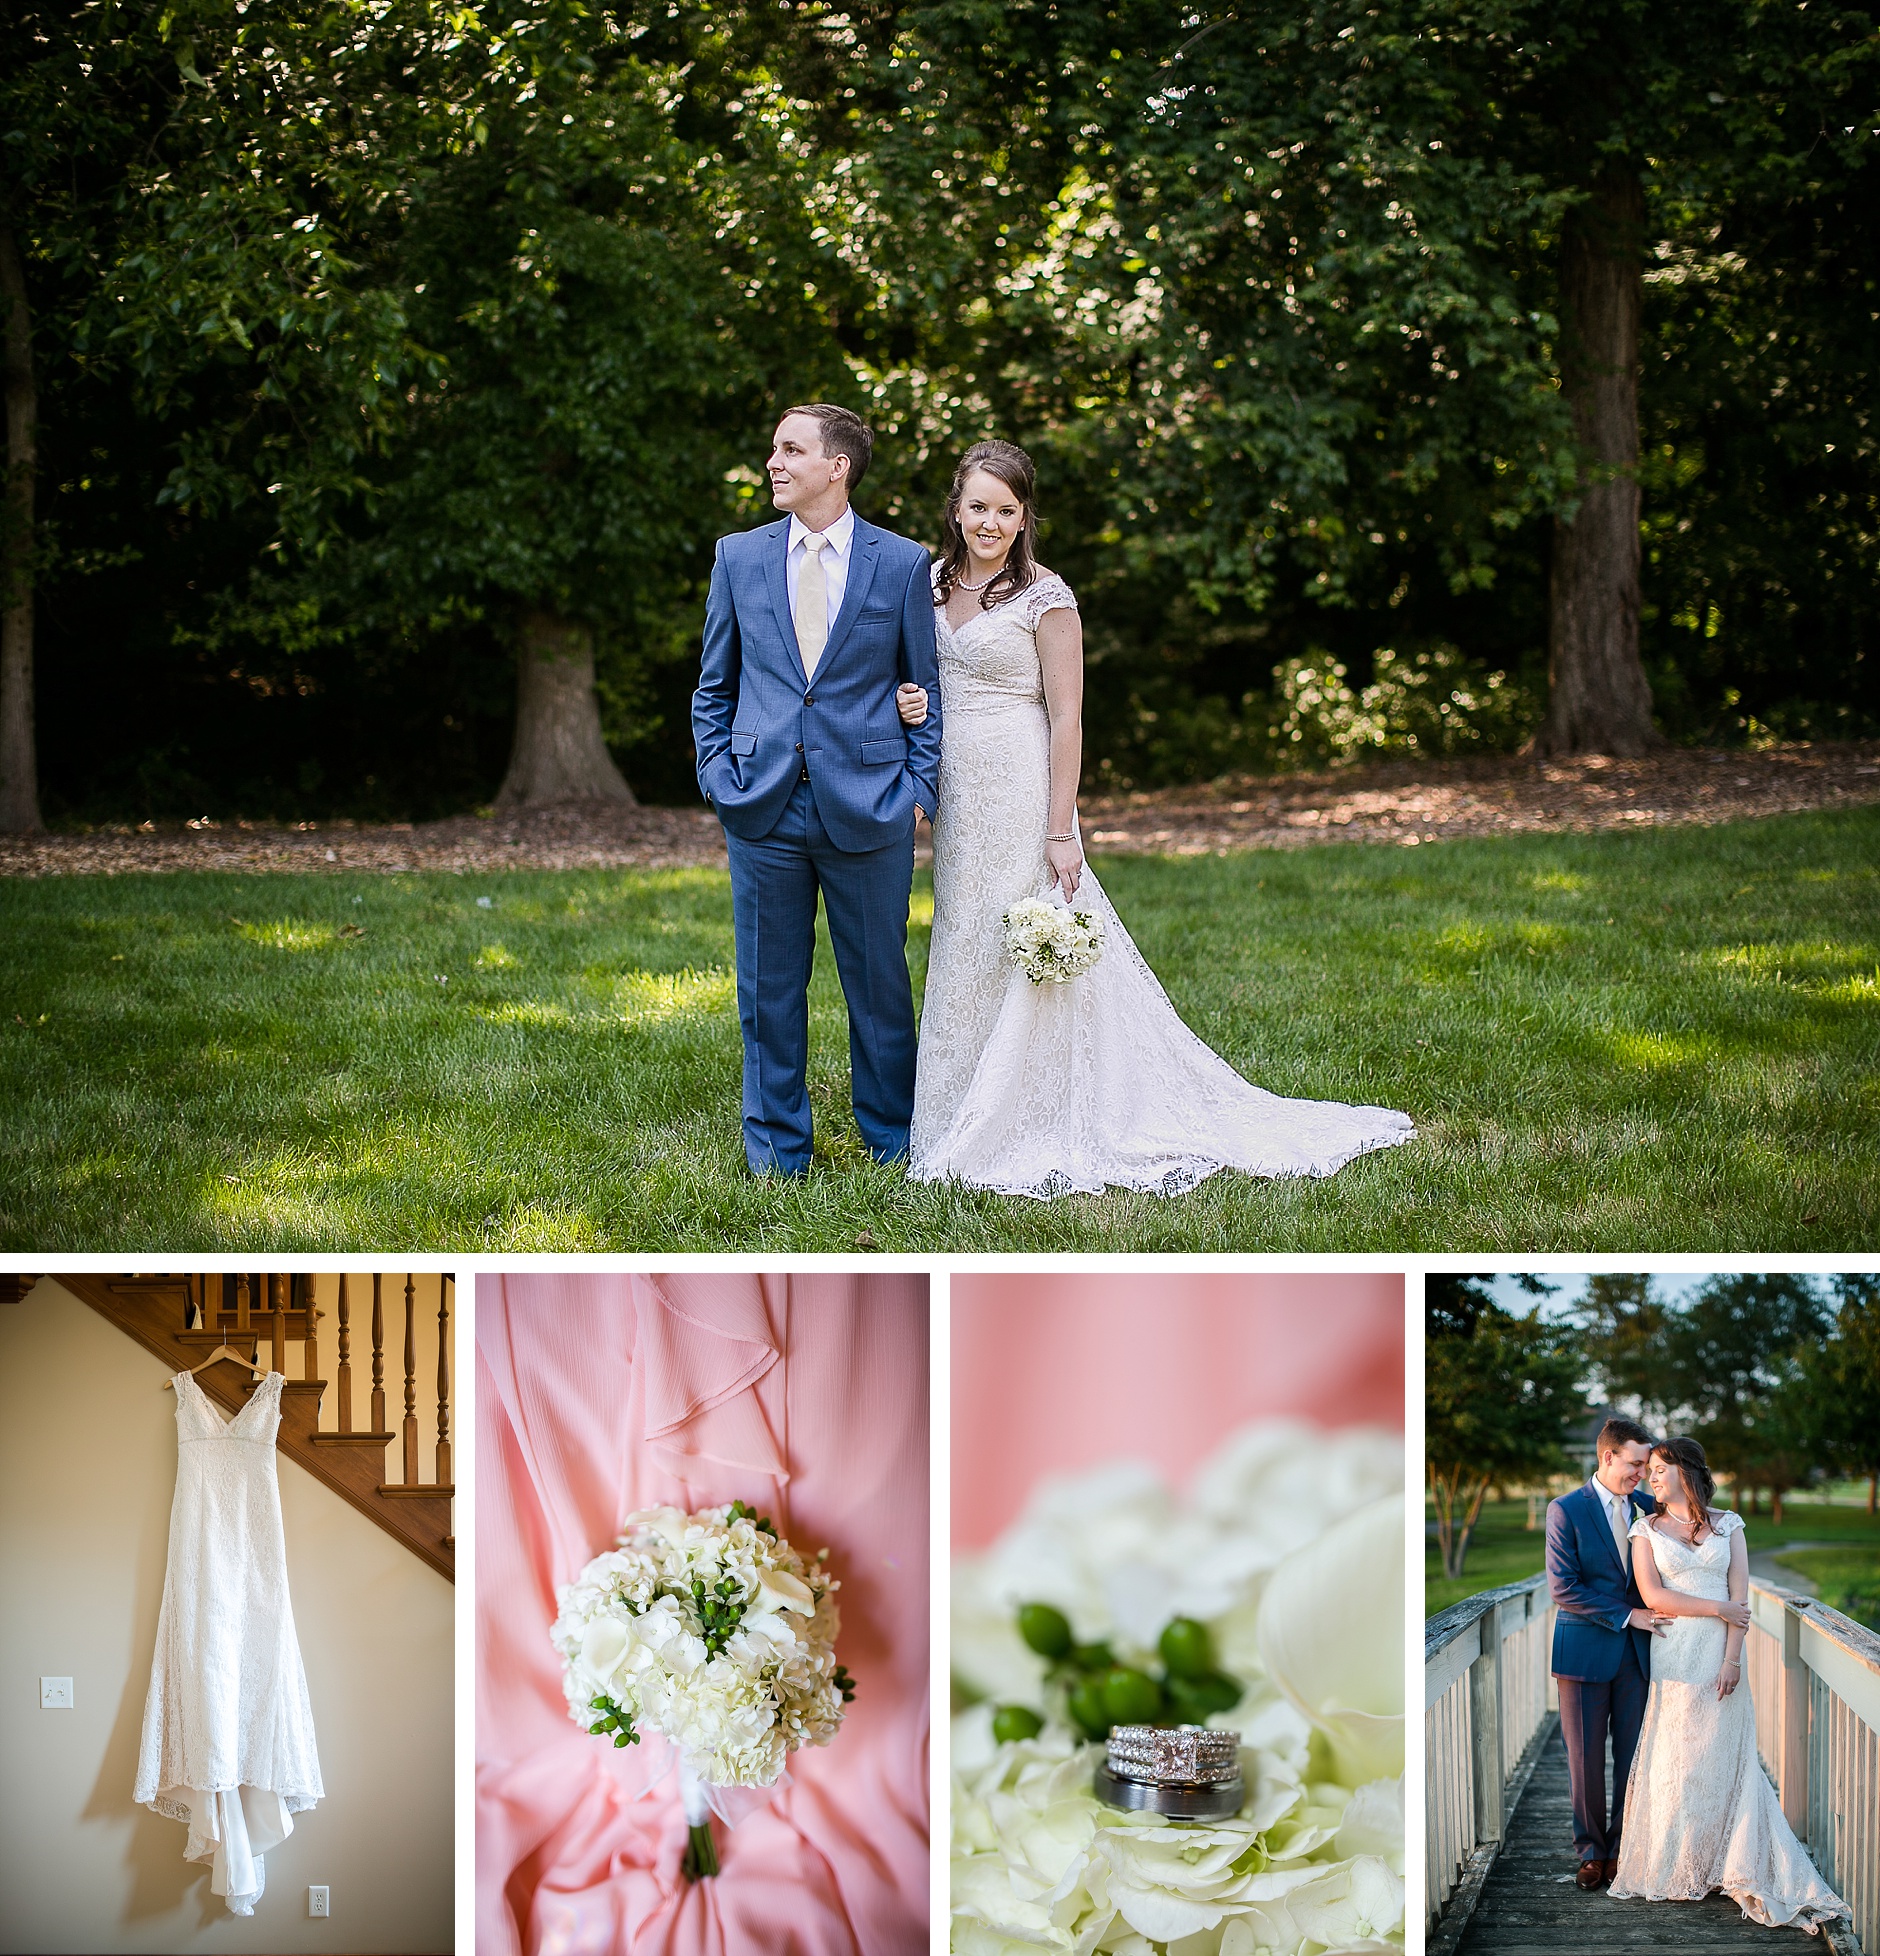 Best-of-Weddings-2015-Rachael-Houser-Photography_0010